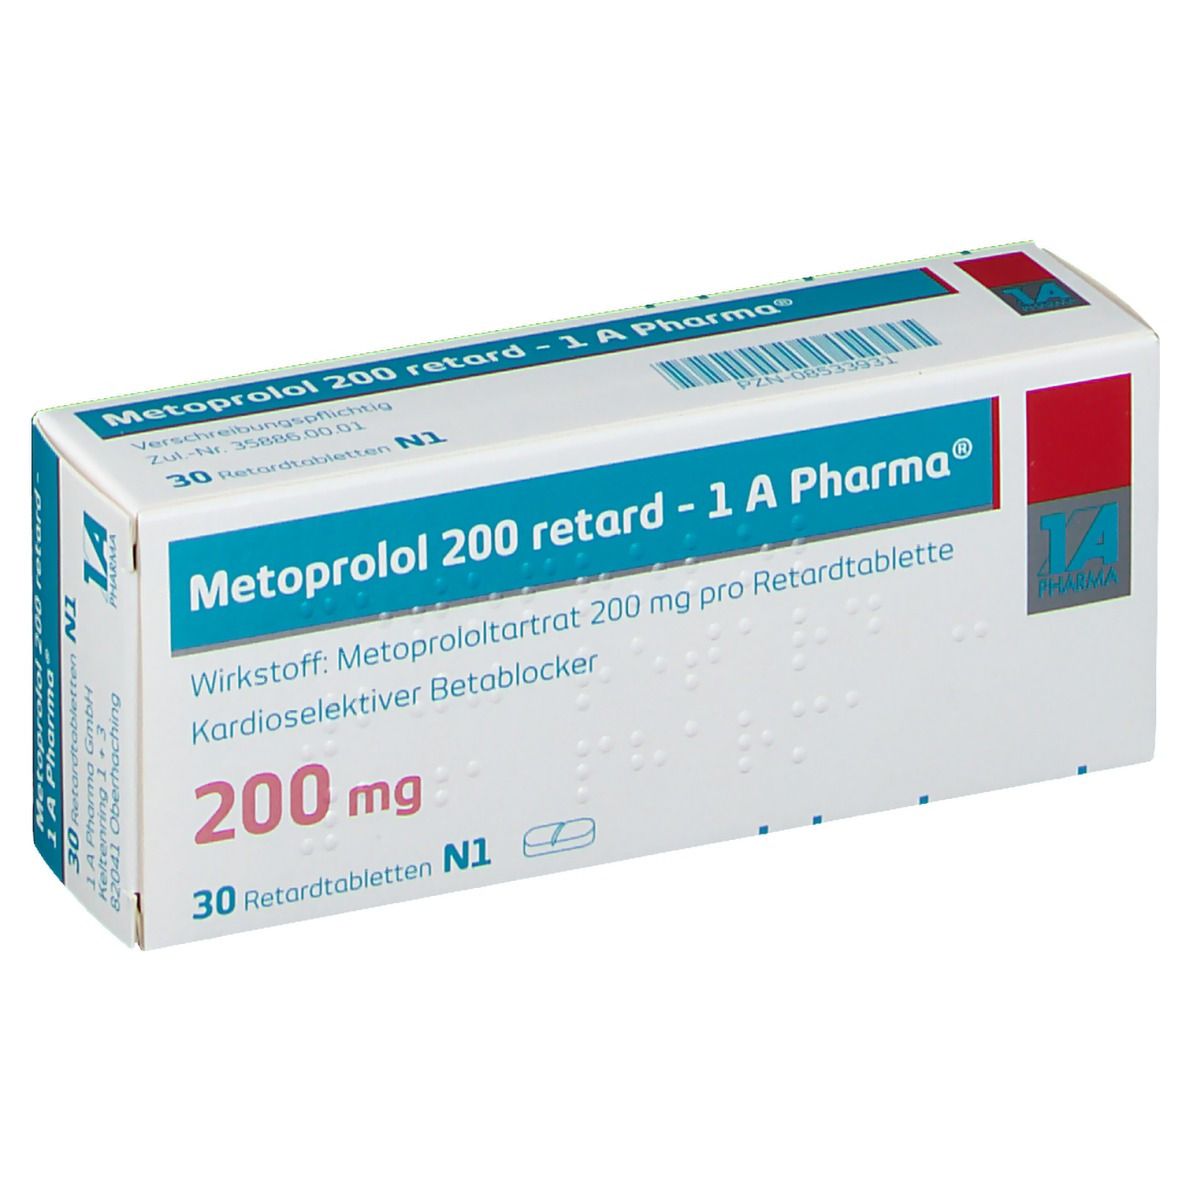 Metoprolol 200 retard - 1 A Pharma®